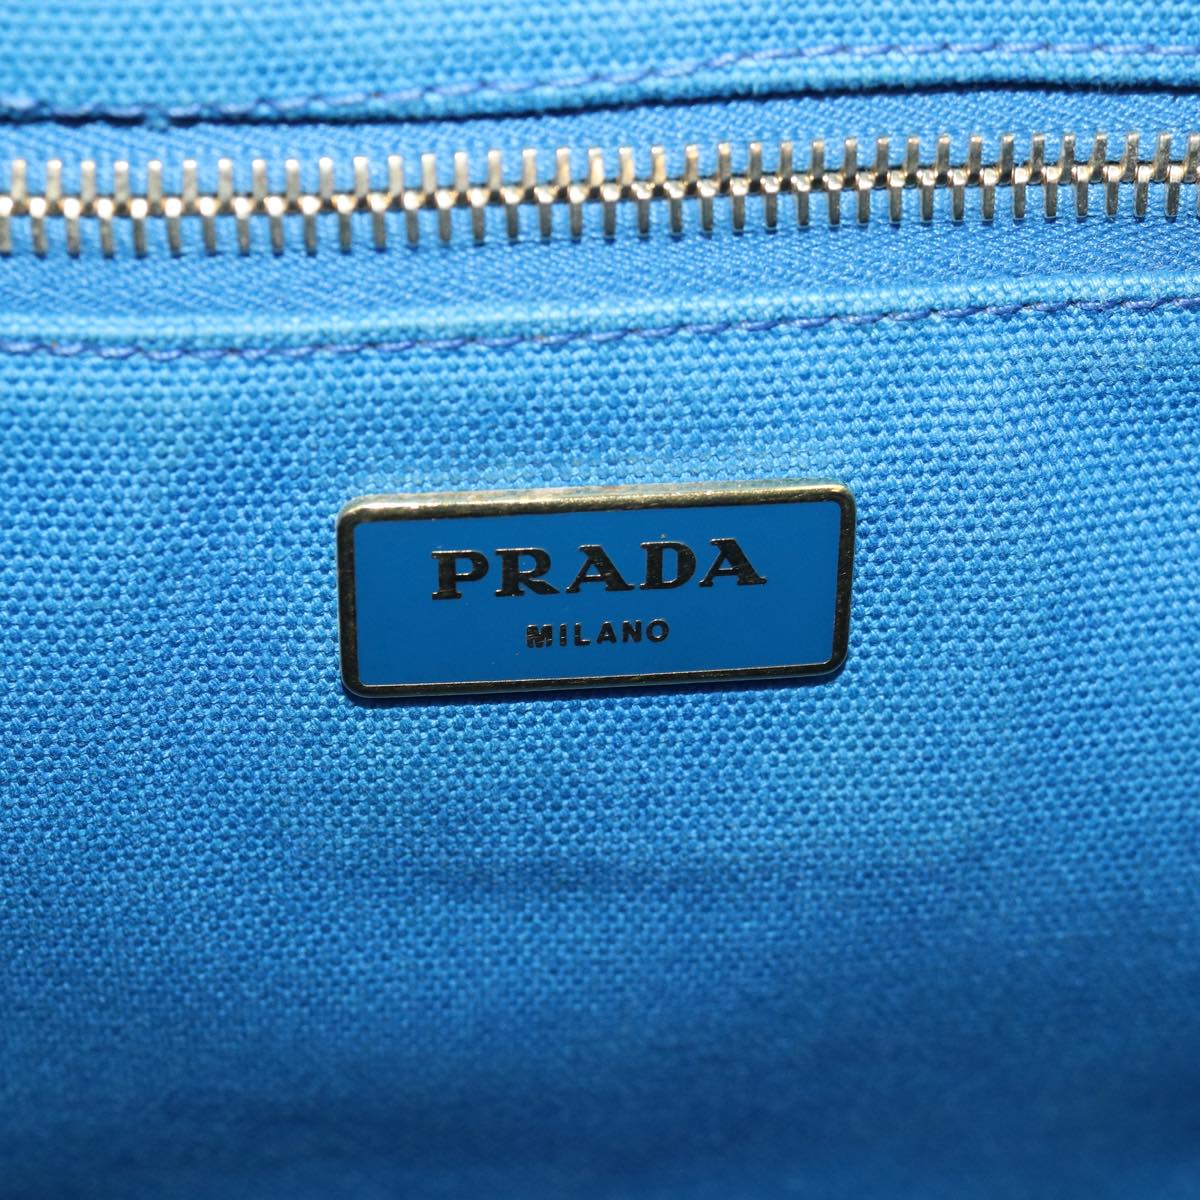 PRADA Canapa MM Hand Bag Canvas Blue Auth 77361